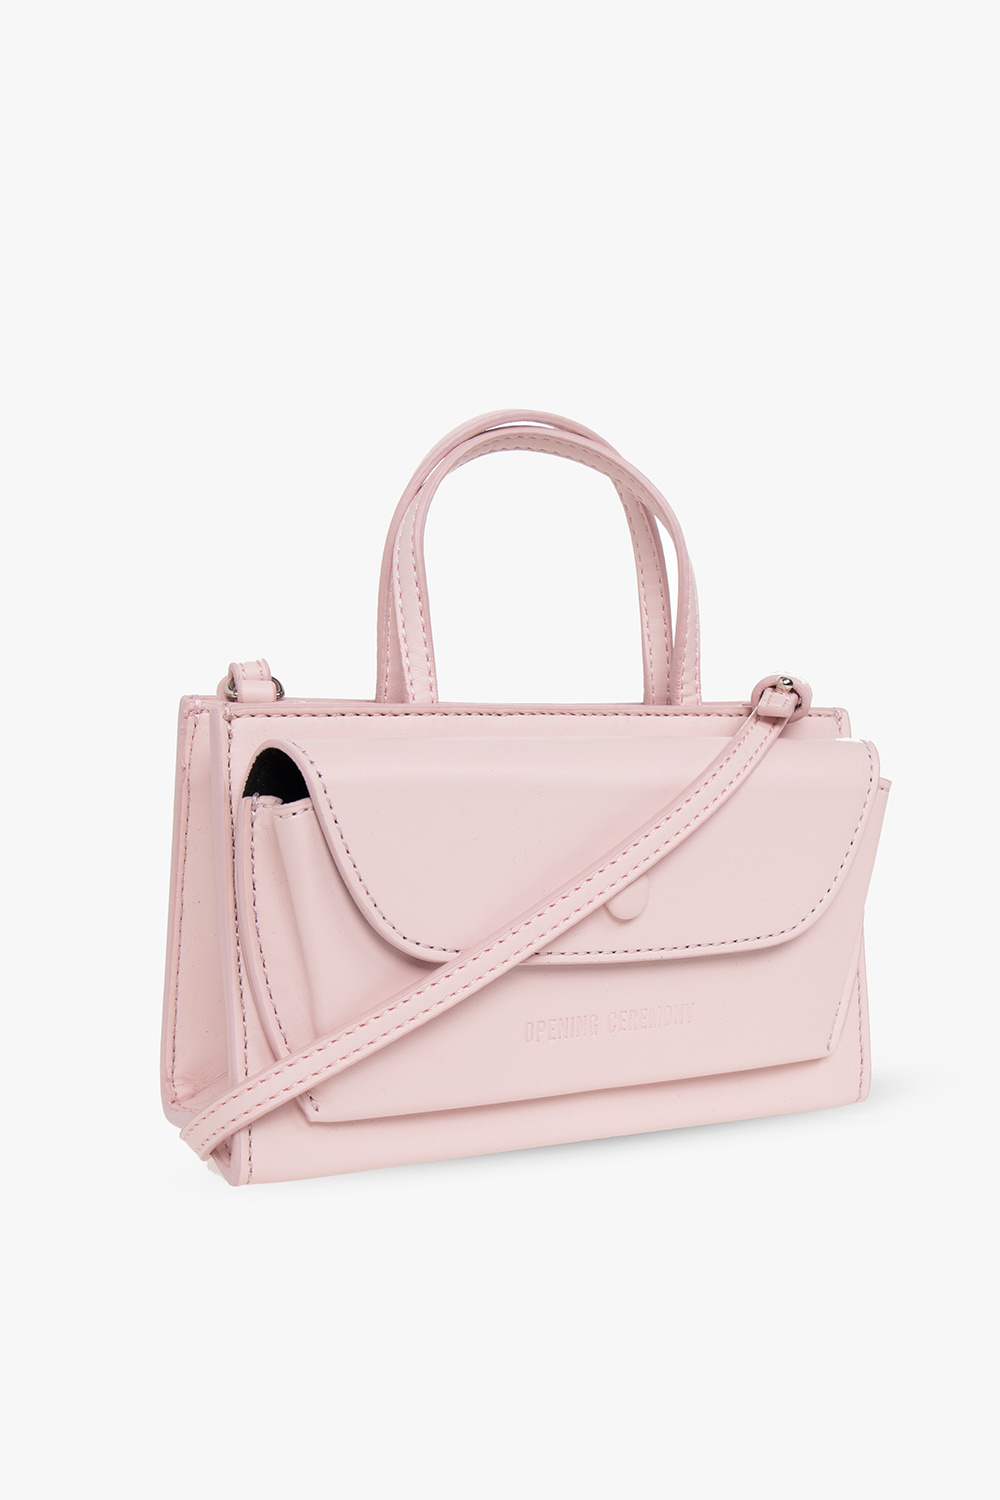 Louis Vuitton Takeoff Sling Bag - Vitkac shop online